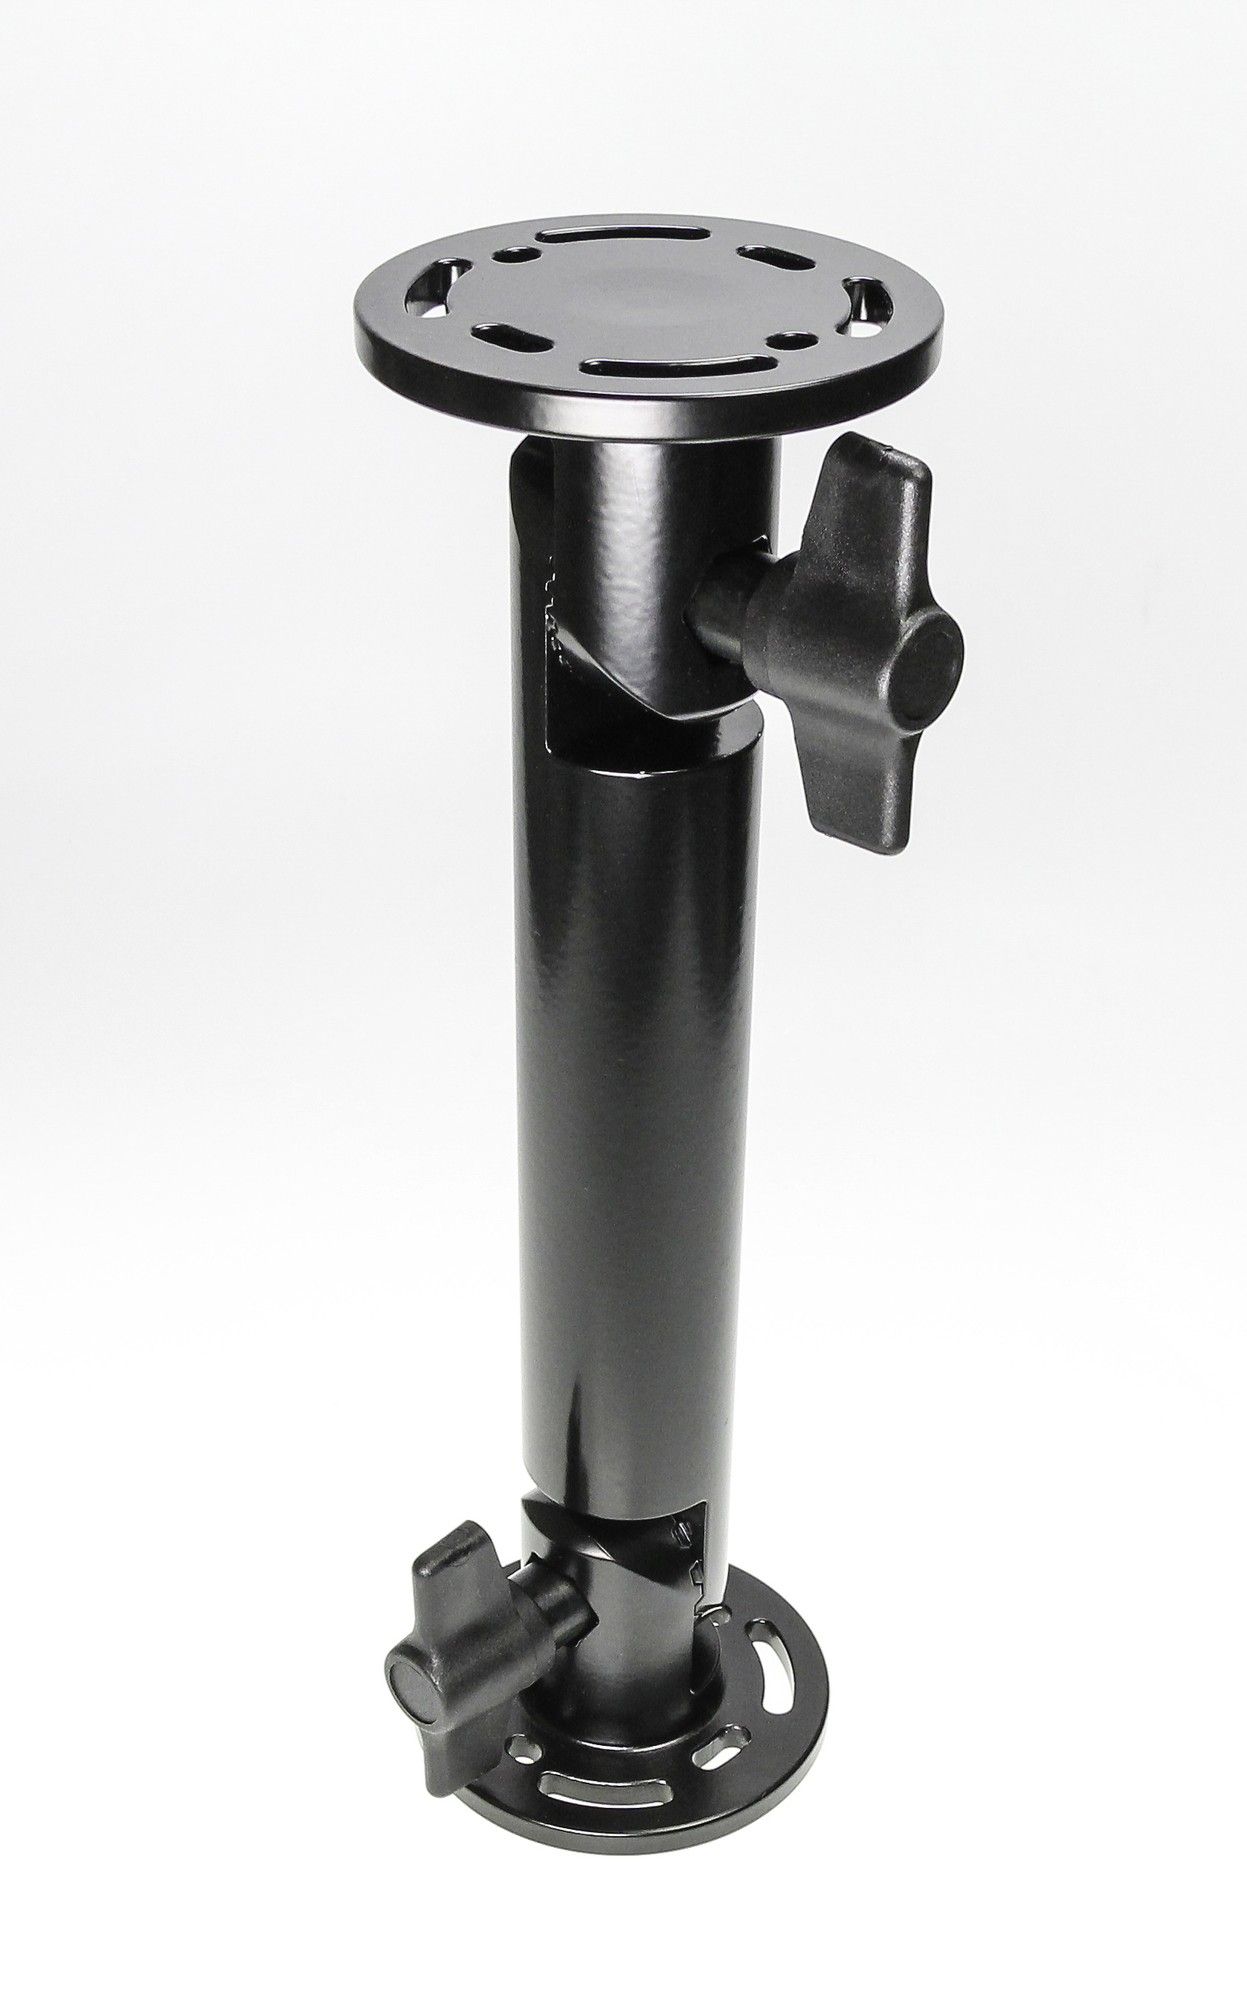 Pedestal mount 6", round base 64mm-small teeth-90° offset